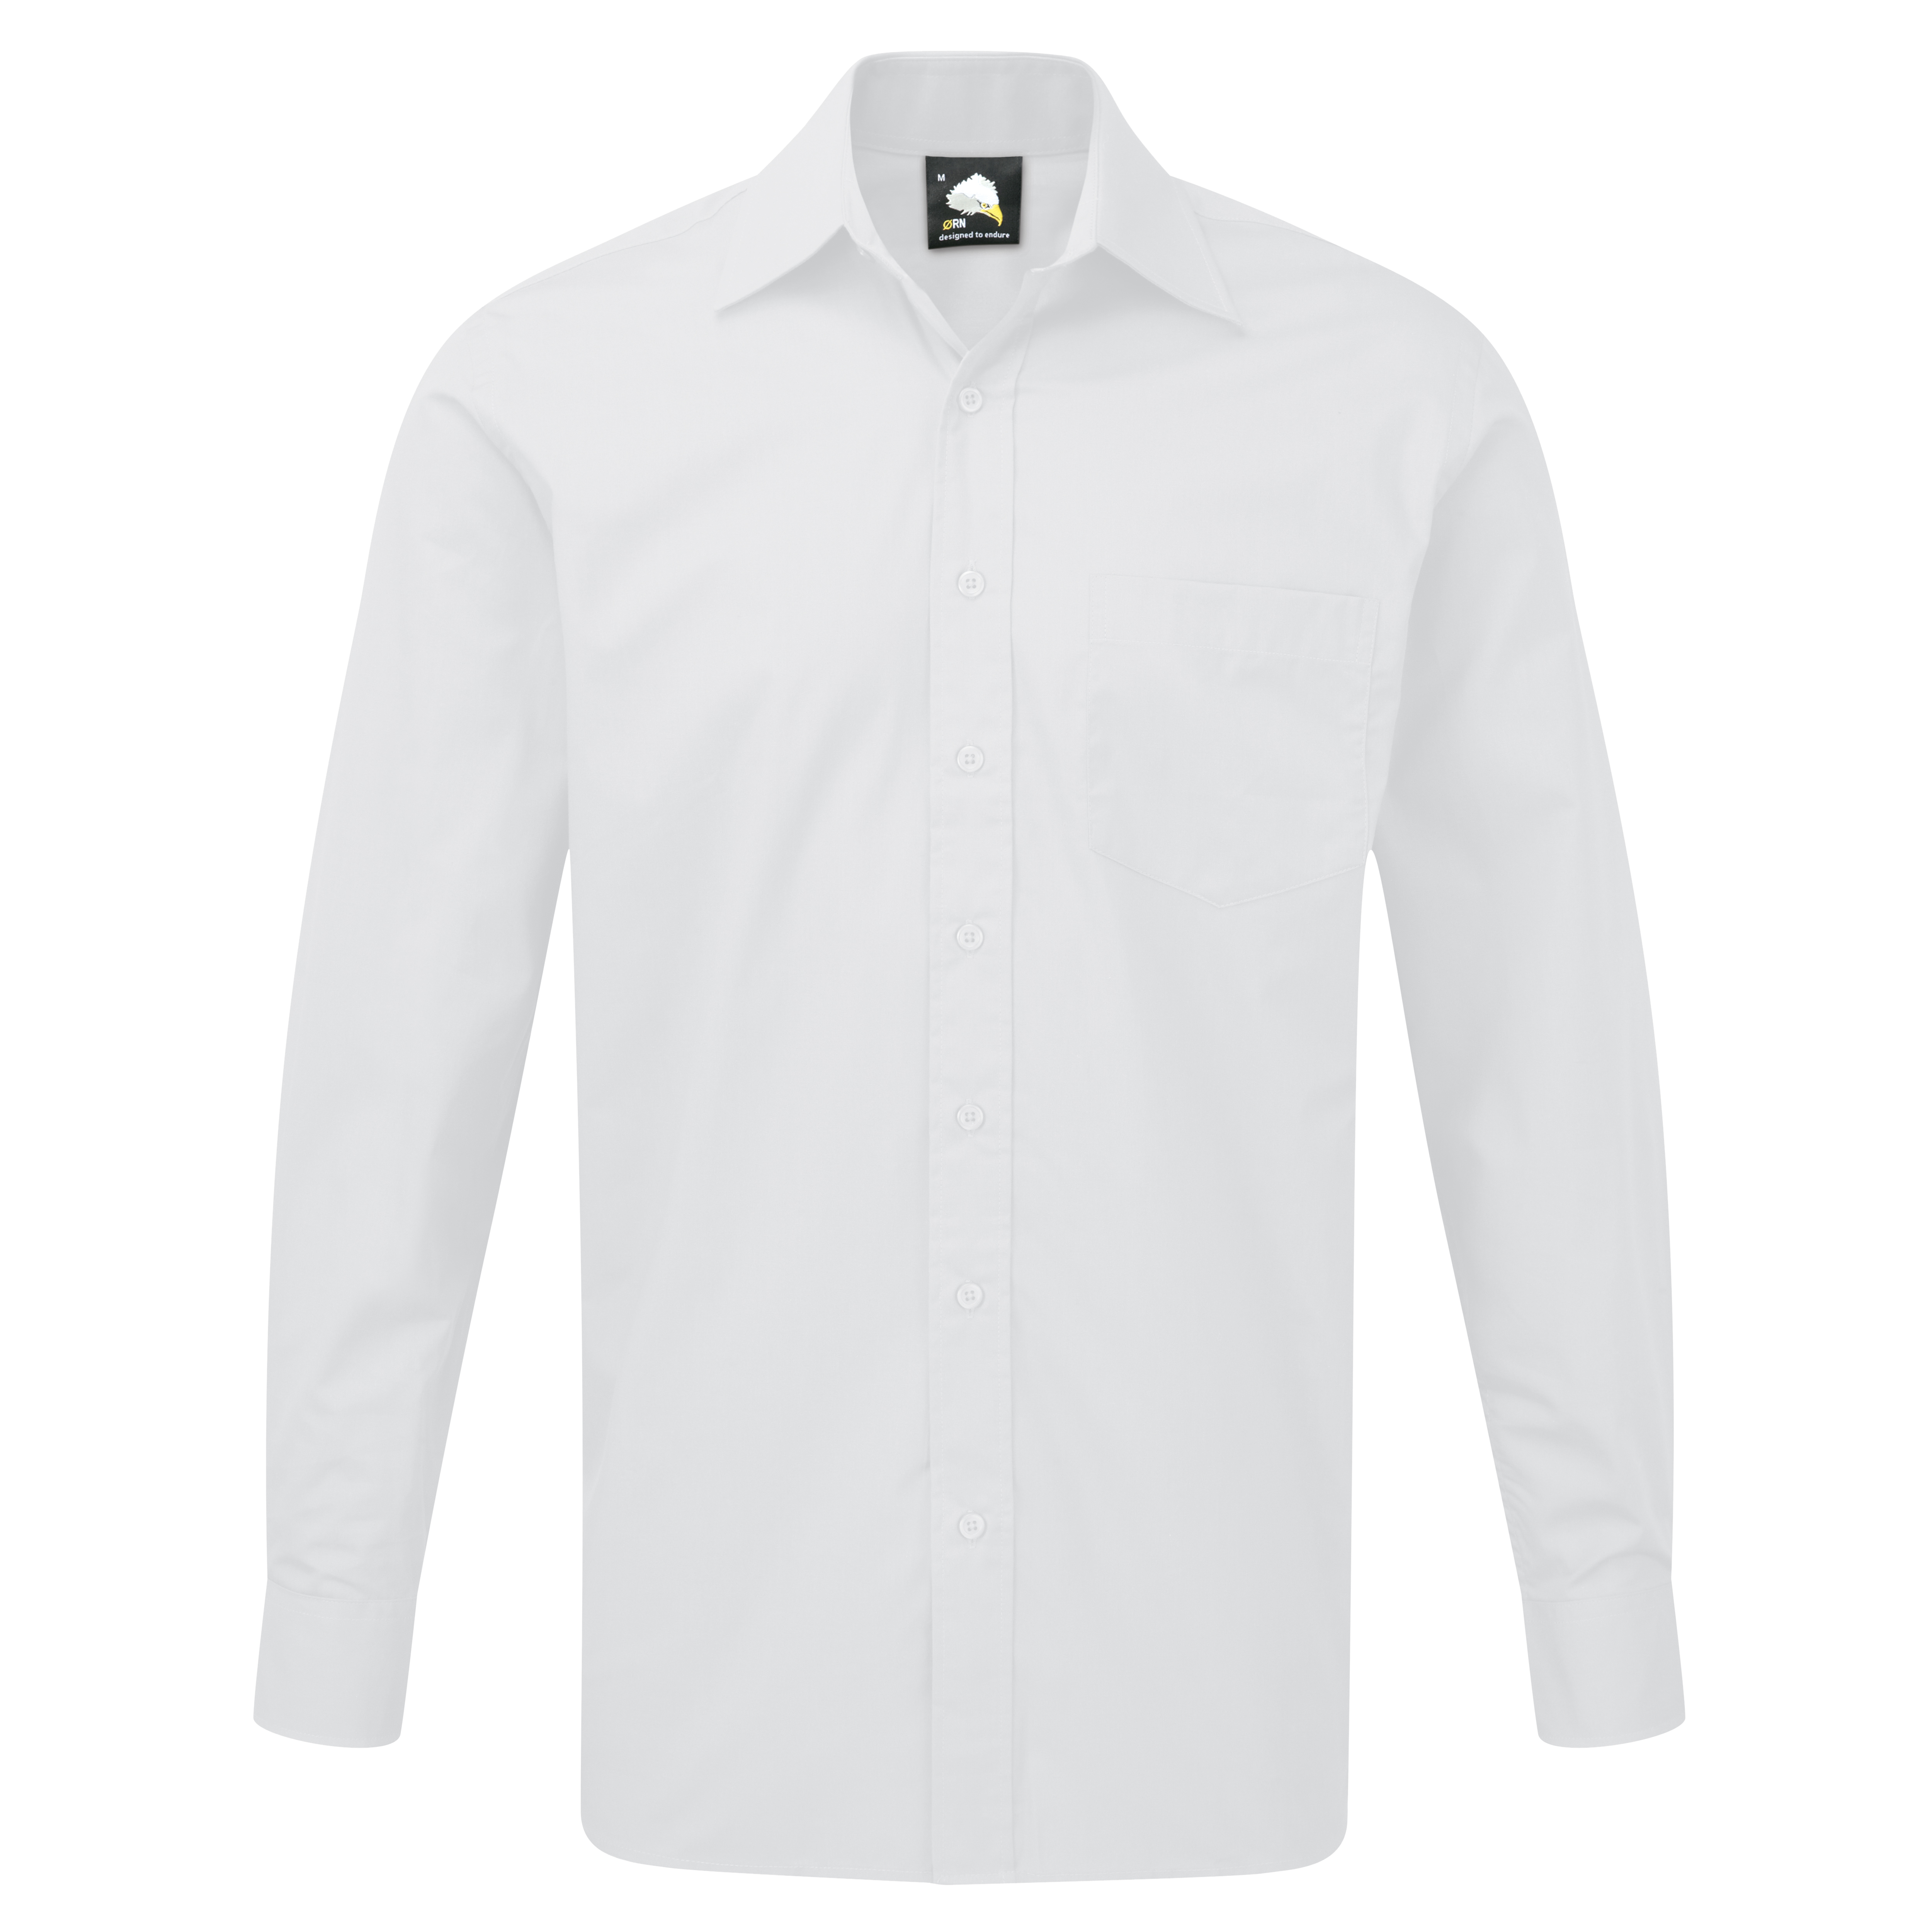 Orn 5310 Premium Long Sleeve Shirt